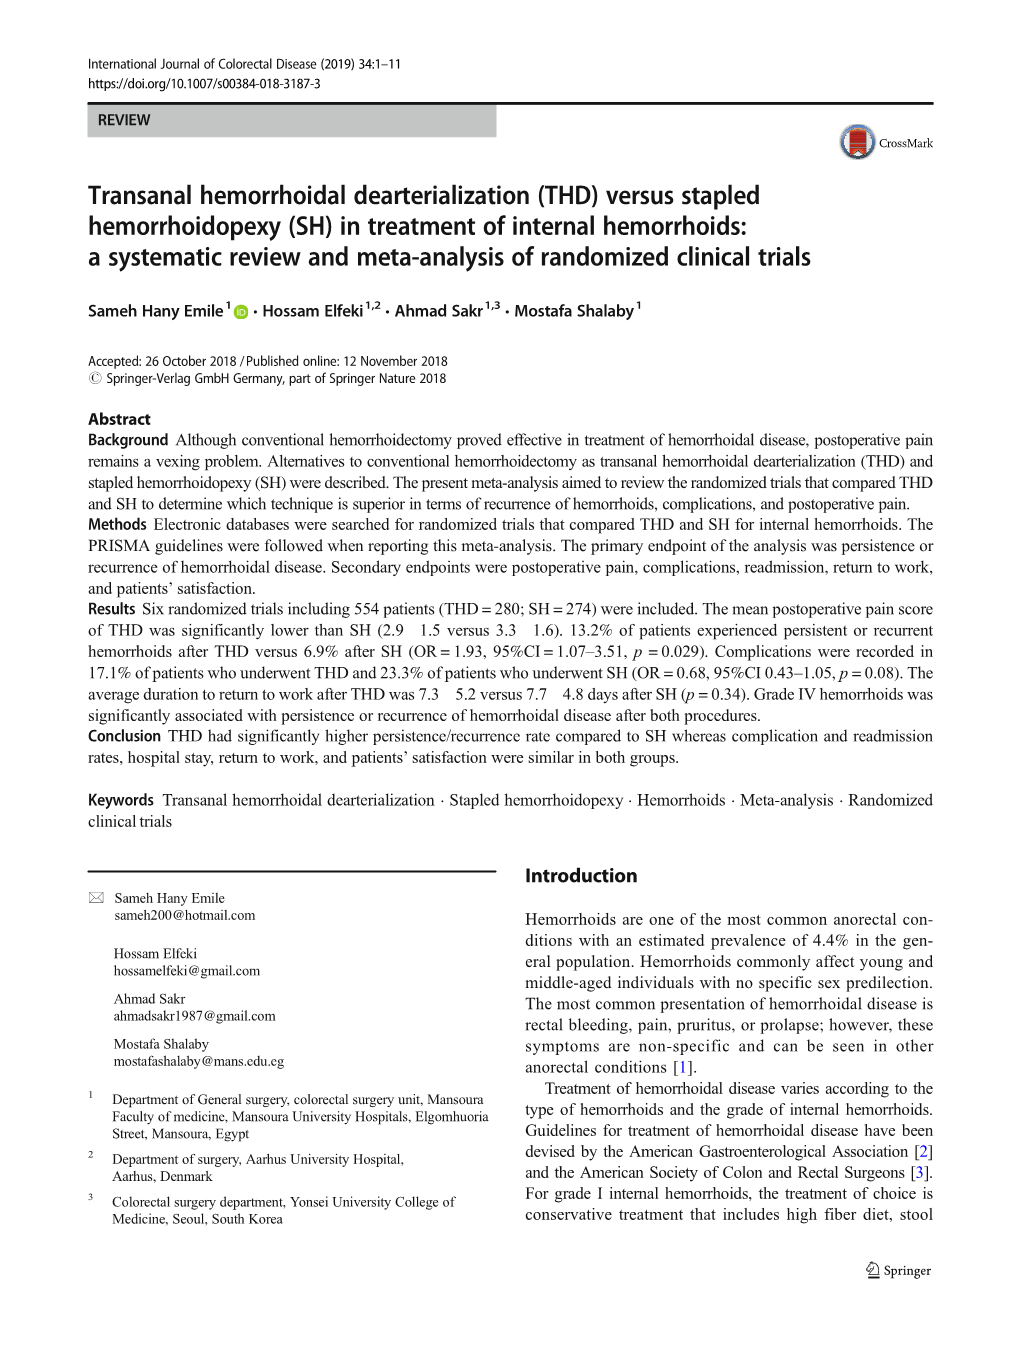 Transanal Hemorrhoidal Dearterialization (THD) Versus Stapled Hemorrhoidopexy (SH) in Treatment of Internal Hemorrhoids: a Syste